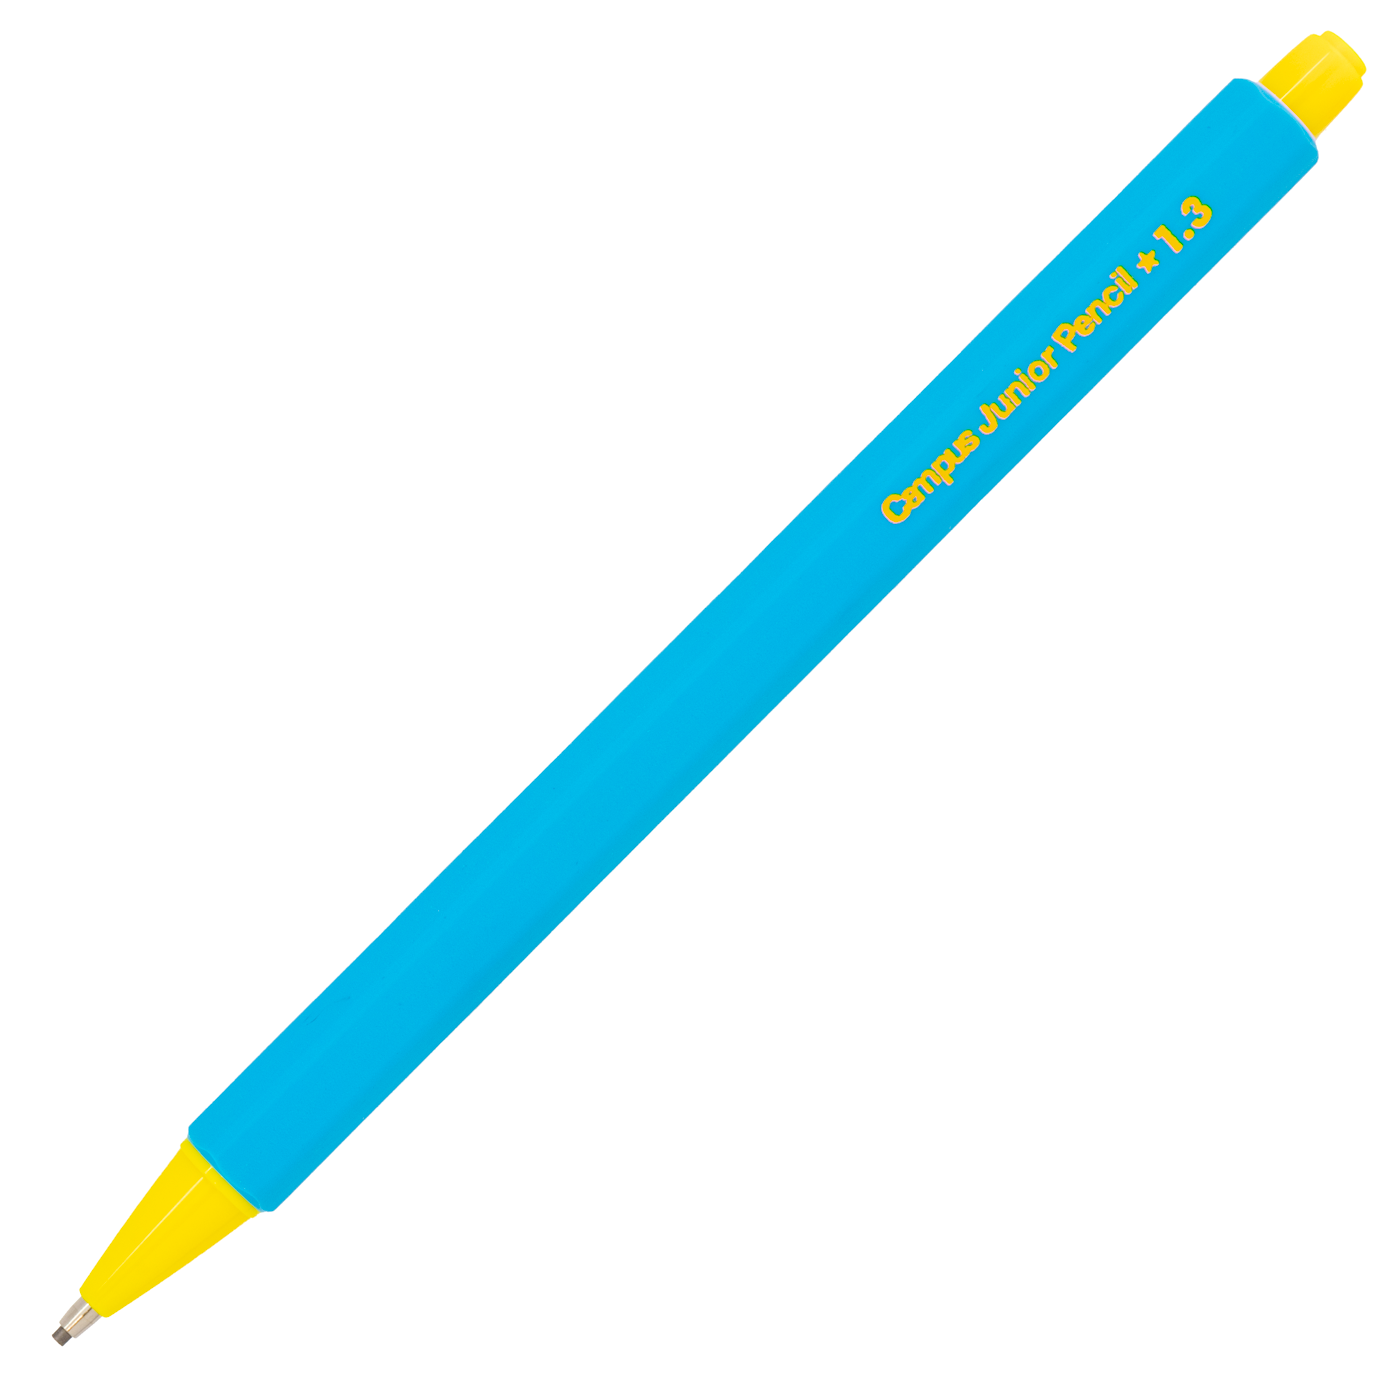 Kokuyo Campus Junior Pencil 1.3mm - Blue